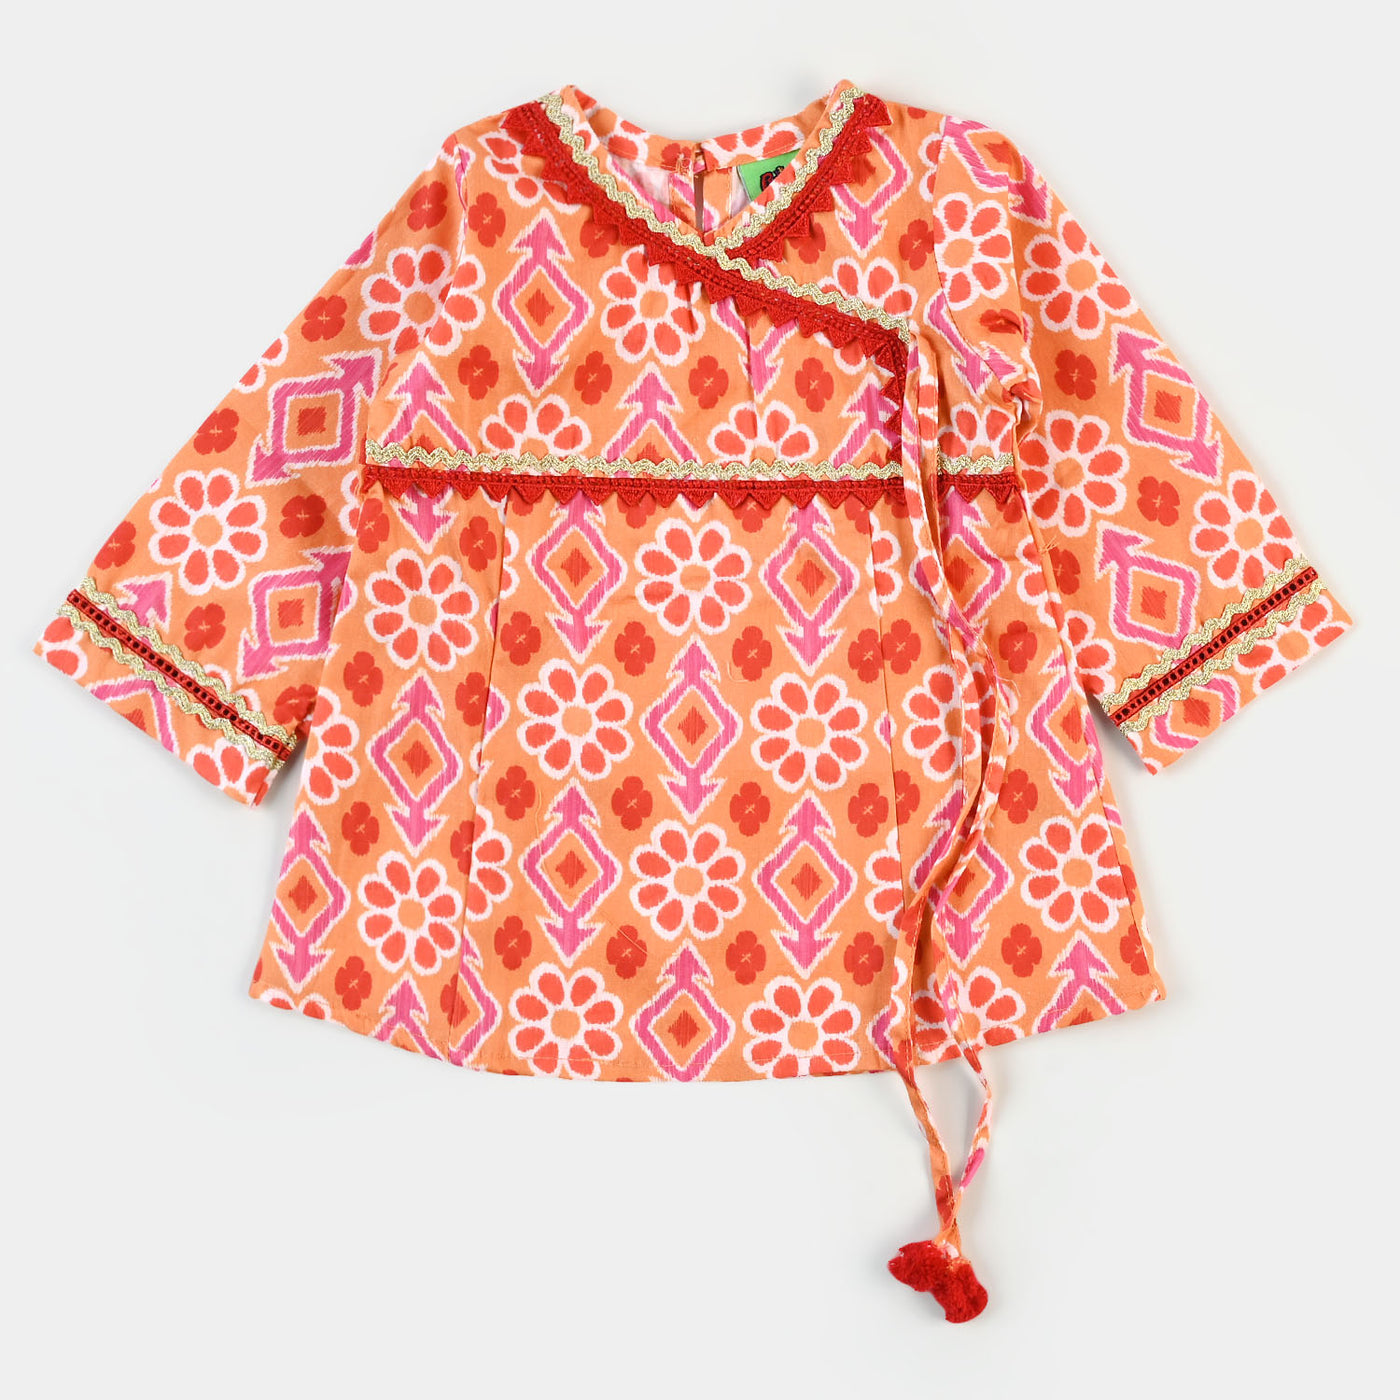 Infant Girls Digital Print Kurti Cotton Vibrant - ORANGE